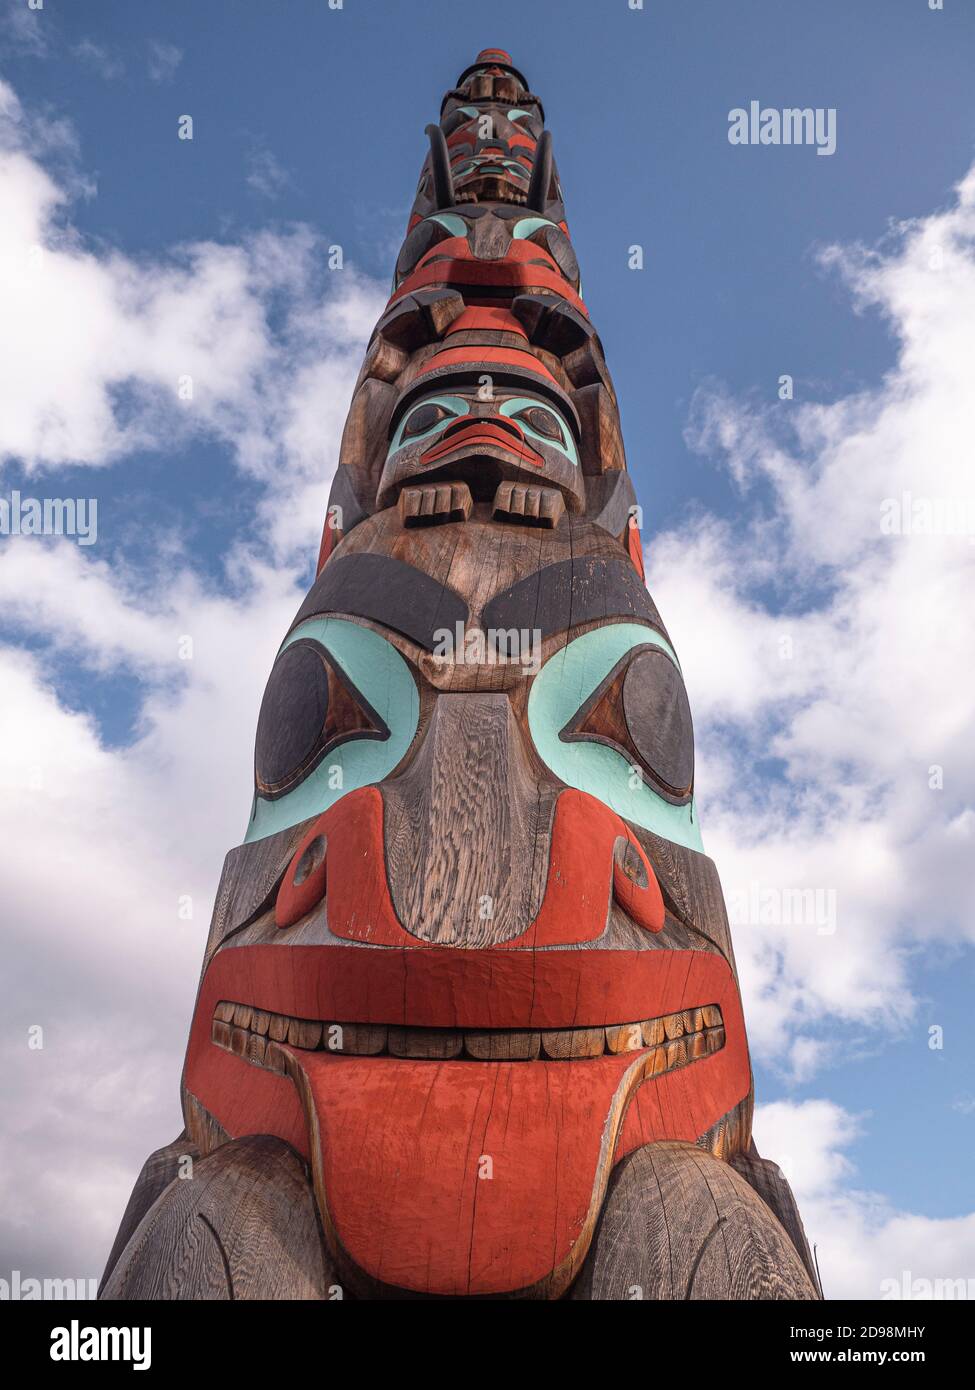 Two Brothers Totem Pole in Jasper, Kanada aus der Haida-Kultur Stockfoto